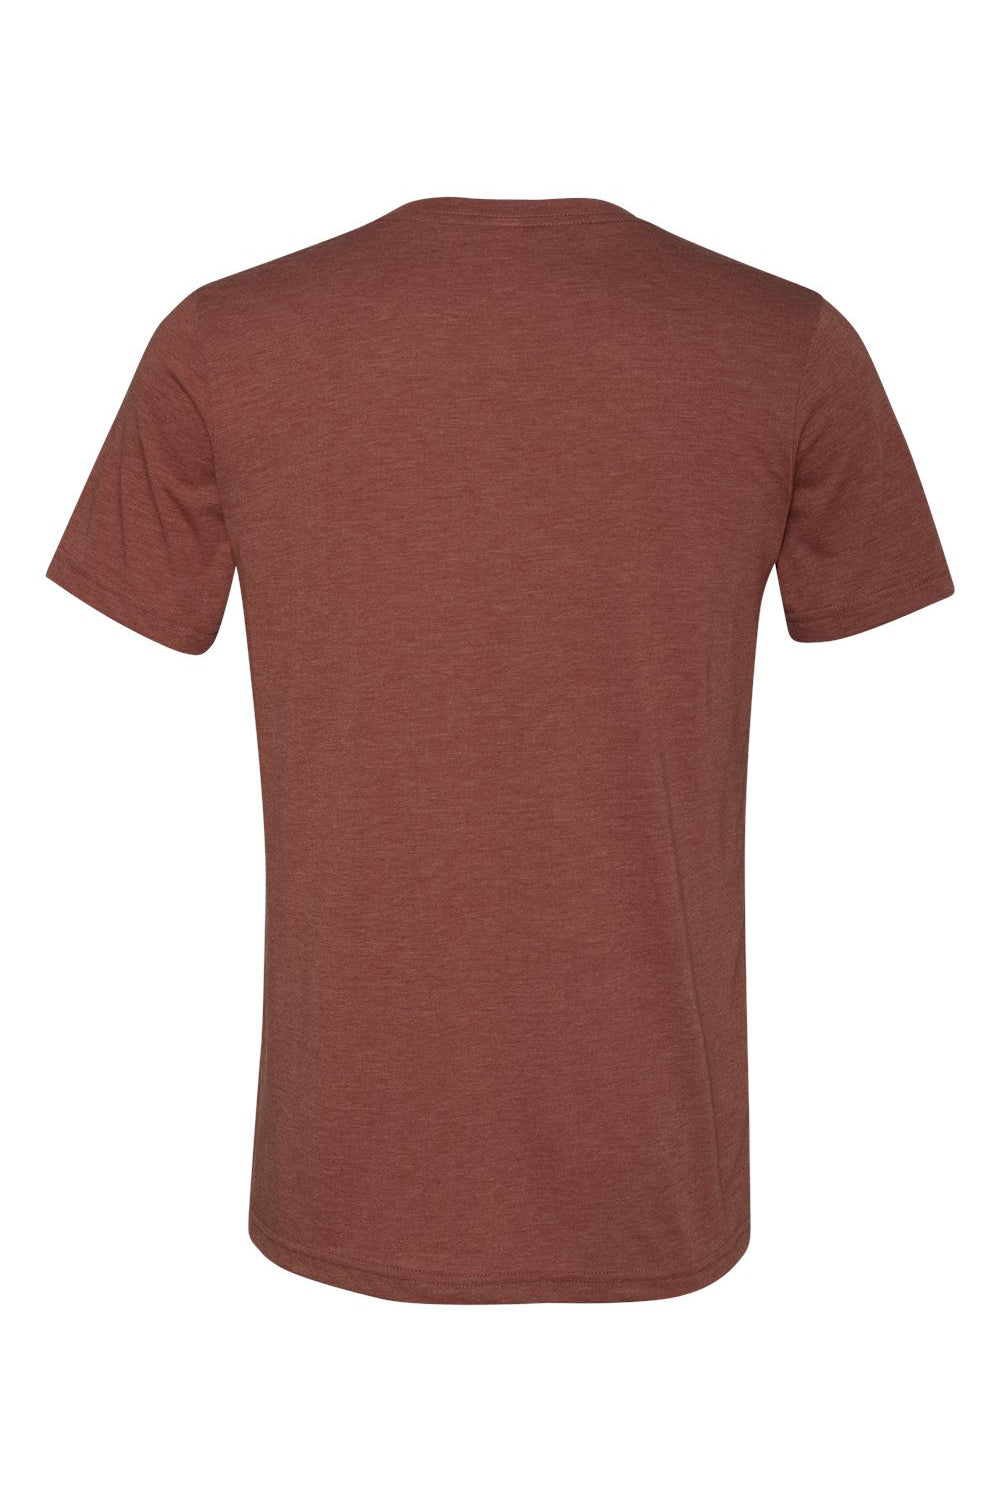 Bella + Canvas BC3415/3415C/3415 Mens Short Sleeve V-Neck T-Shirt Clay Red Flat Back